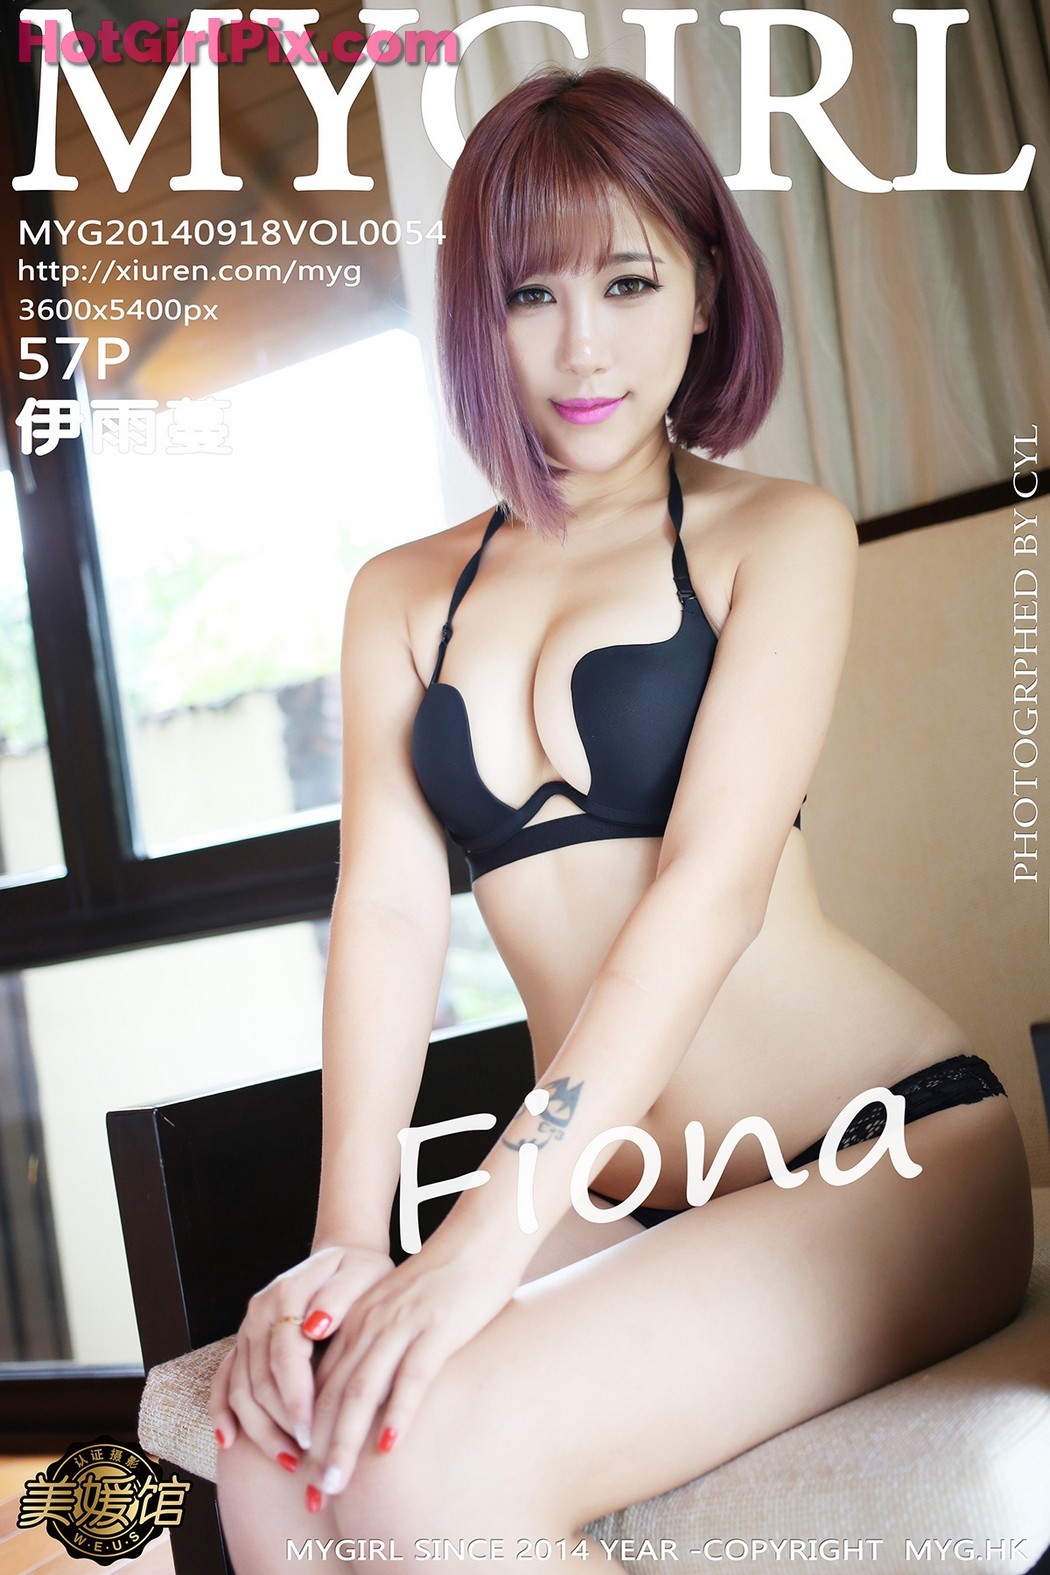 [MyGirl] Vol.054 Fiona伊雨蔓 Yi Yu Man Cover Photo